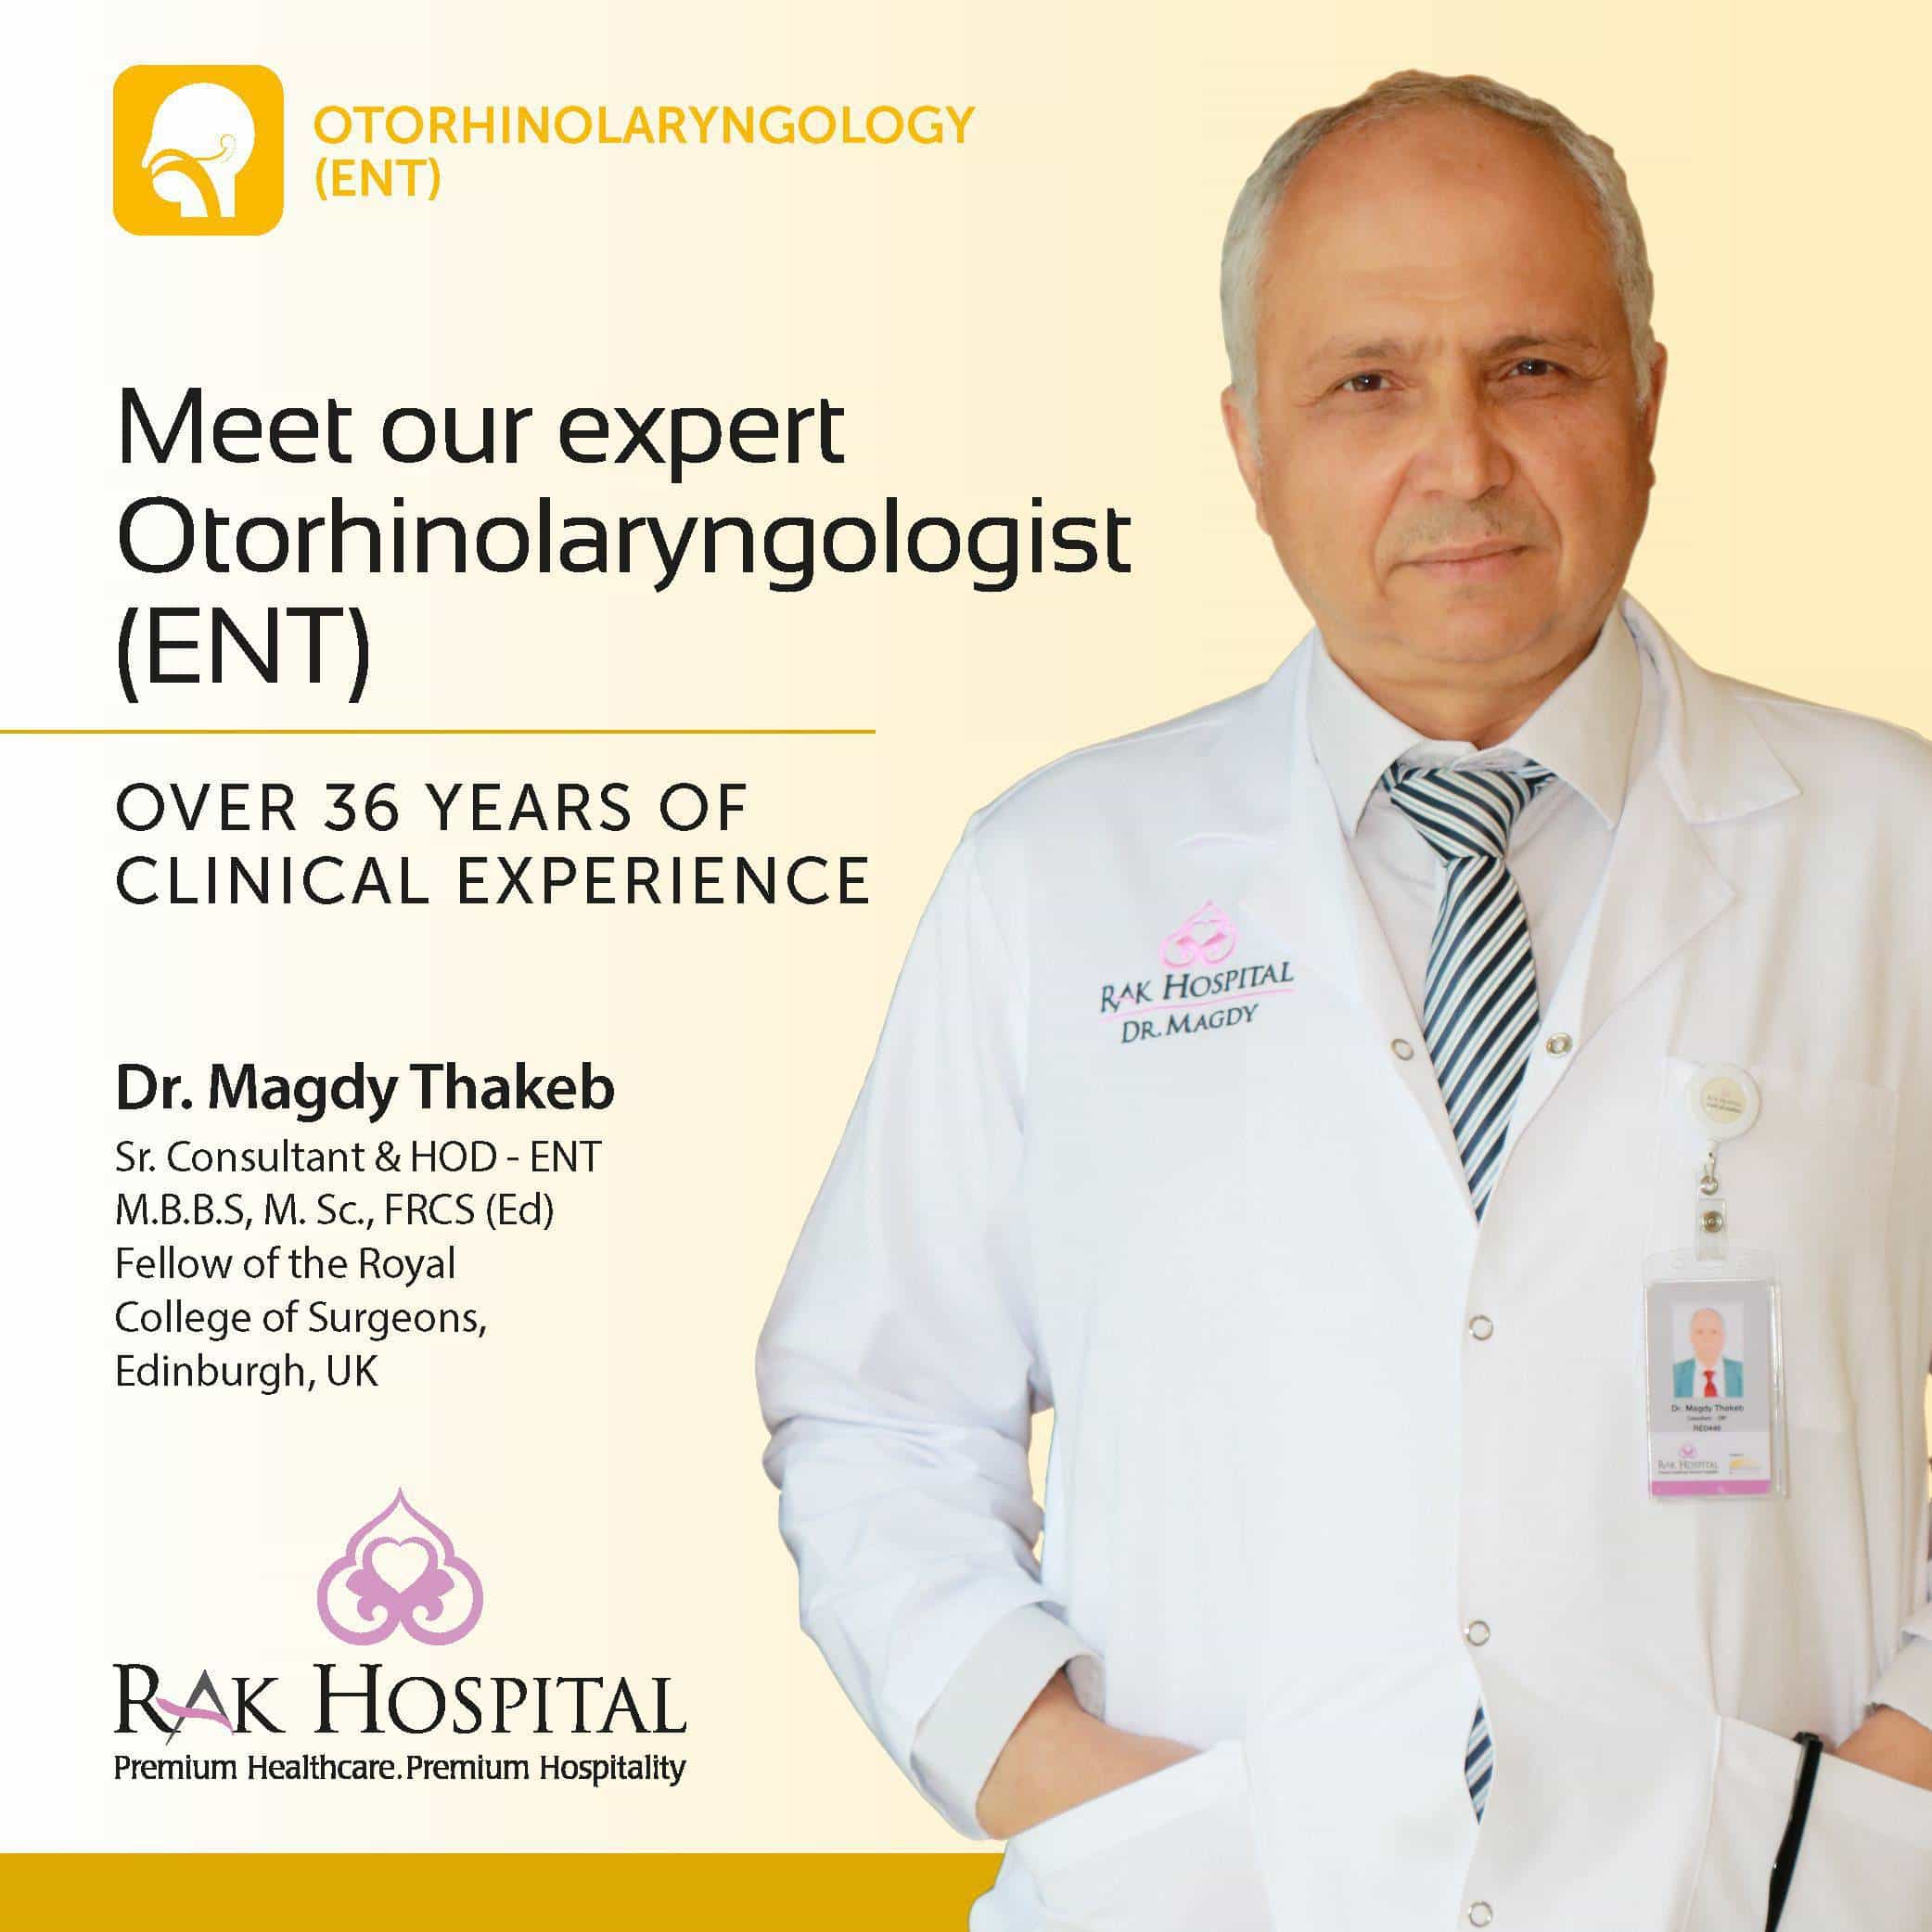 Meet our expert Otorhinolaryngologist (ENT) Dr. Magdy Thakeb ( Sr. Consultant & HOD - Otorhinolaryngology (ENT) )